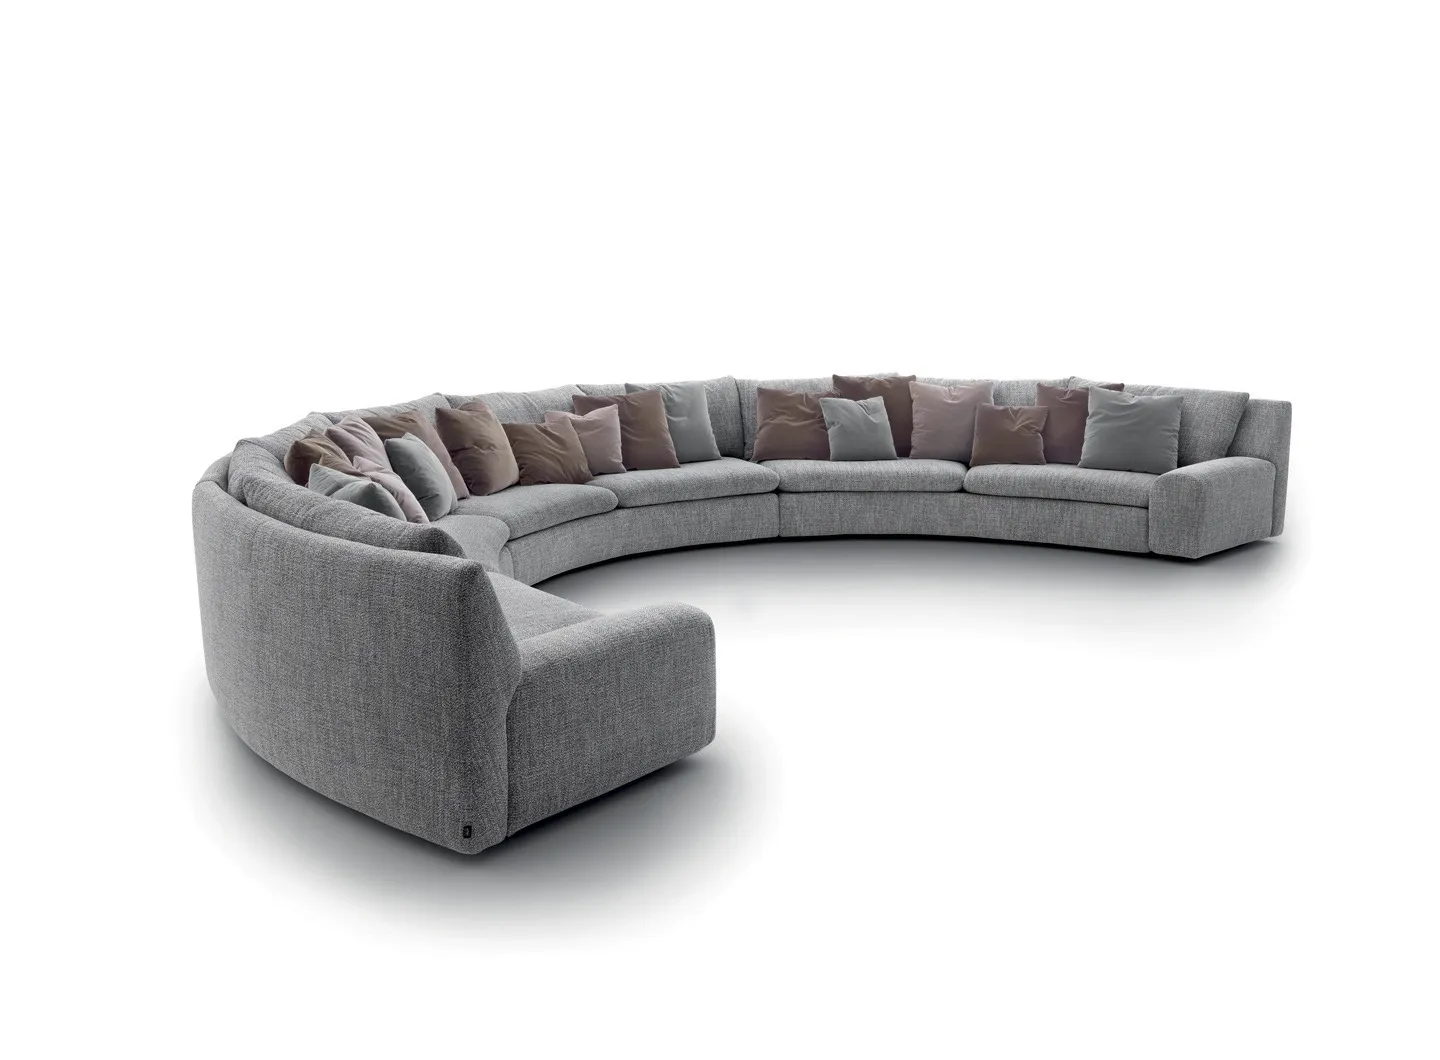 Ben Ben curved sofa design Cini Boeri